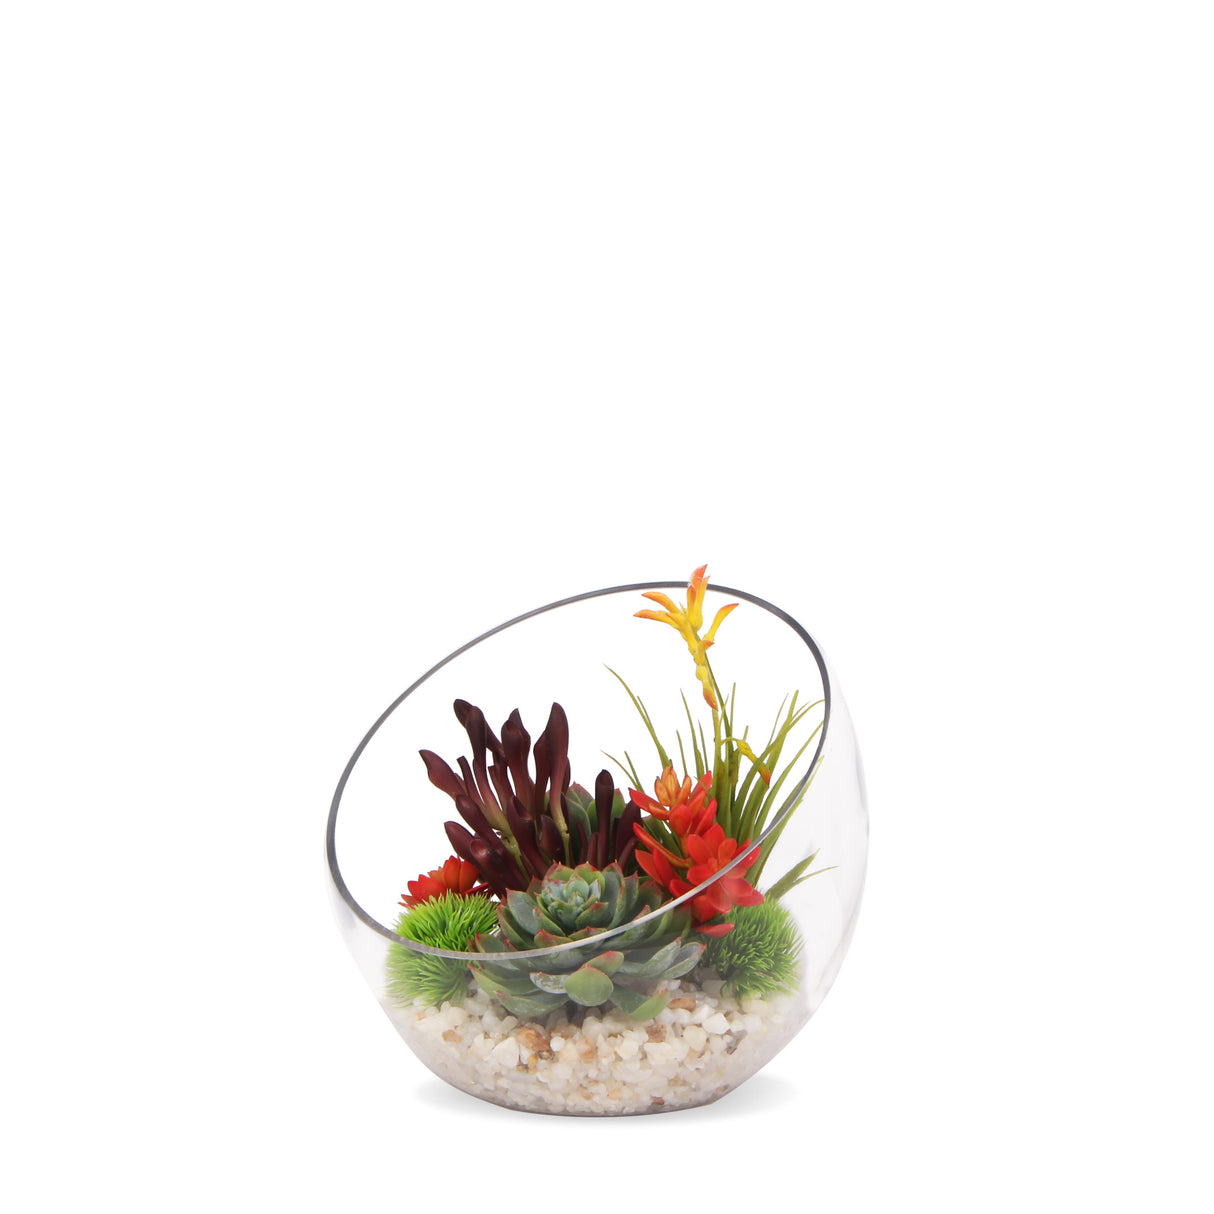 Tropical Colorful Succulents Arrangement in Clear Glass Slant Cut Modern Bowl#S-43